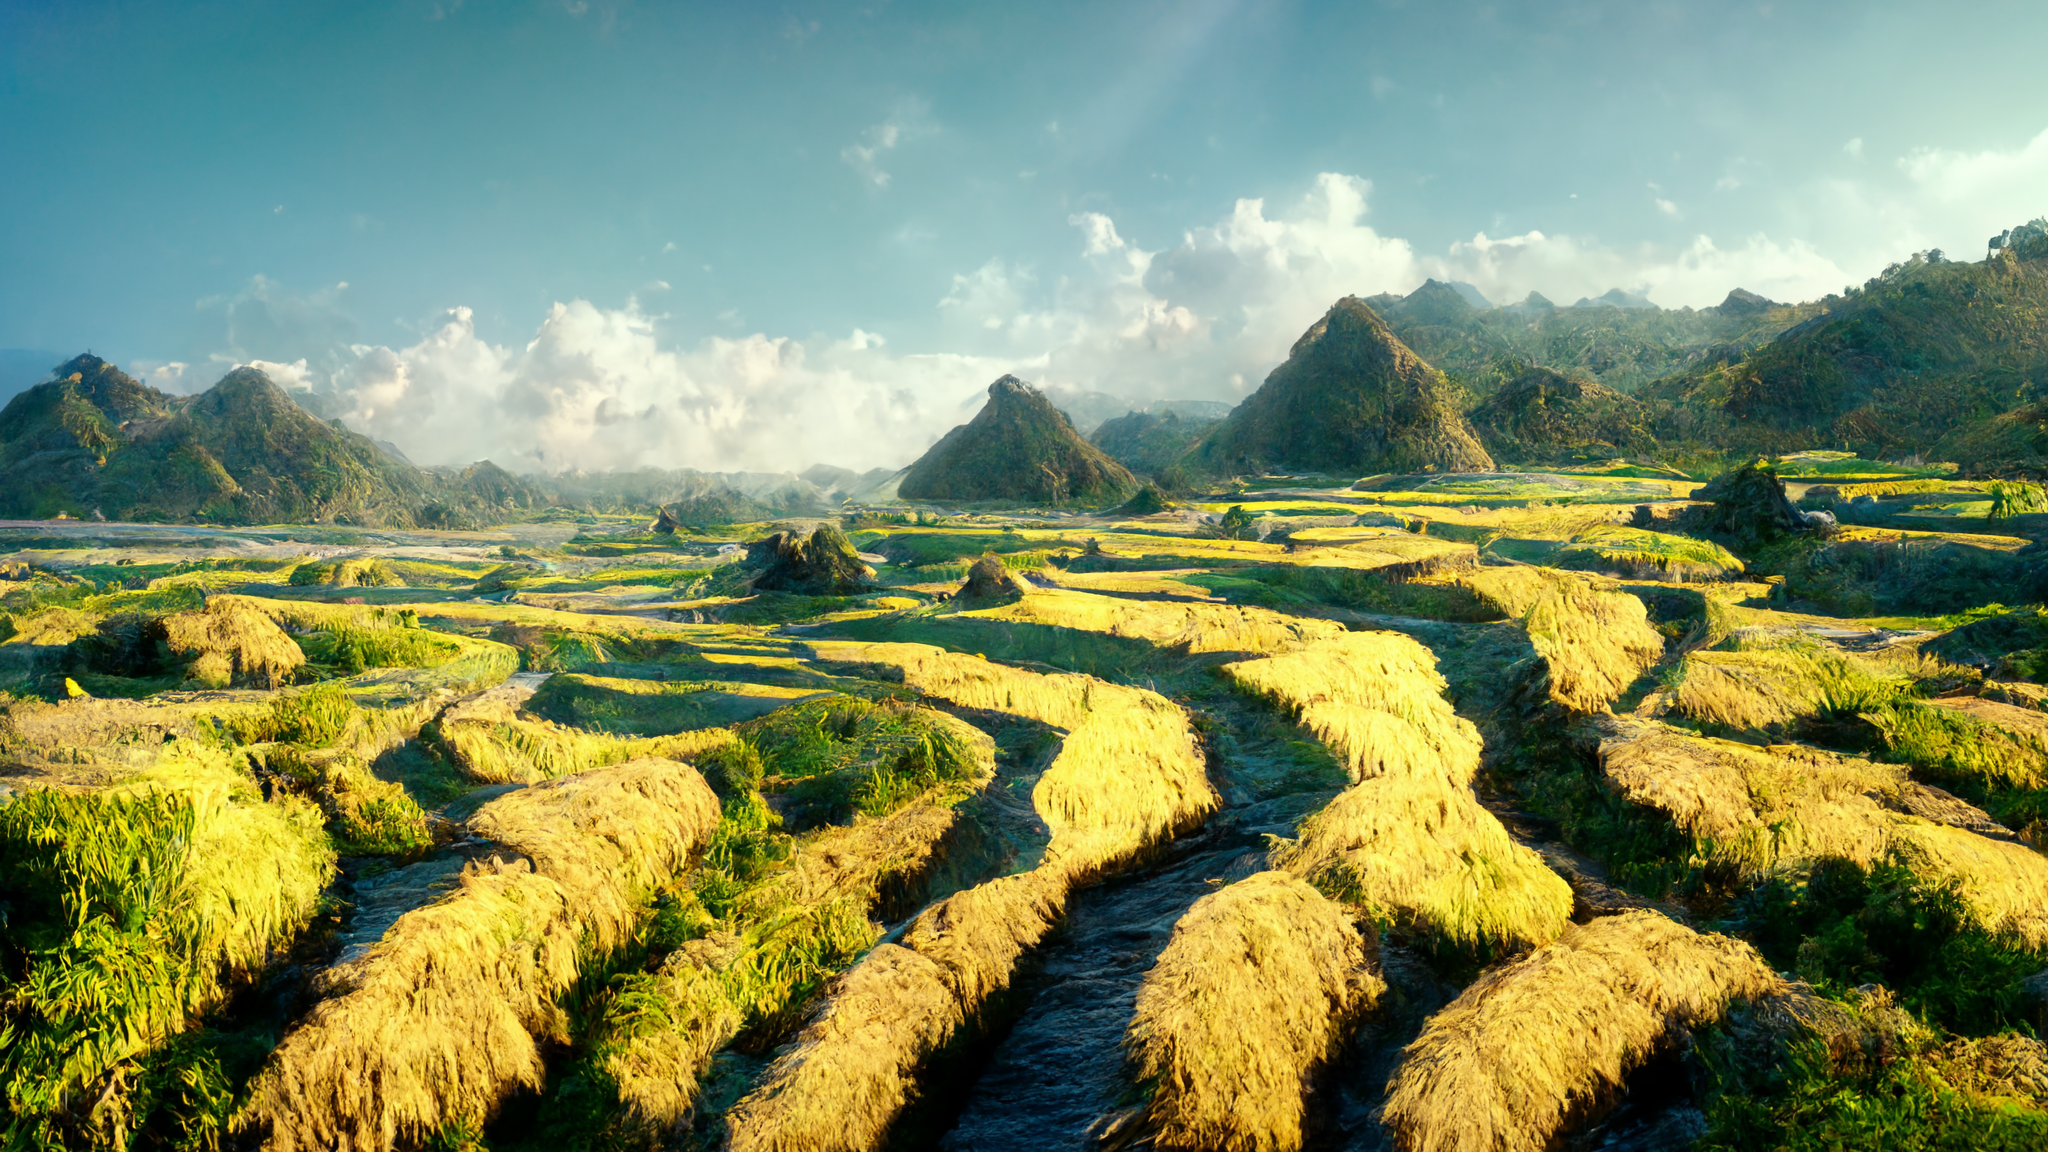 General 2048x1152 rice fields mountains field green landscape clouds sky AI art